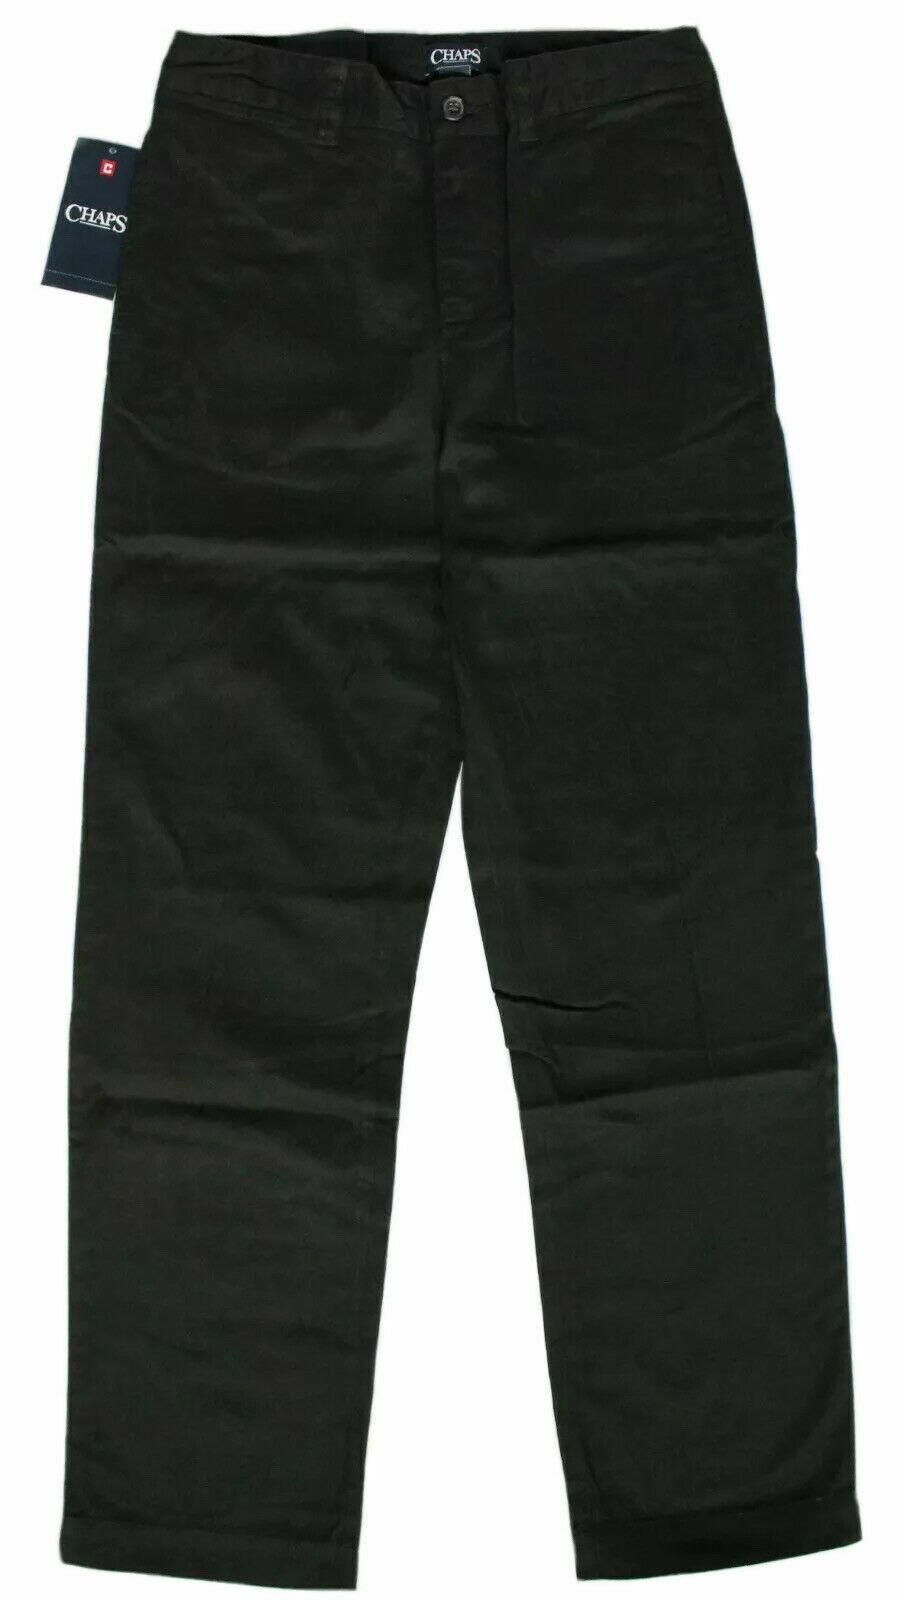 Chaps Boys Classic Fit Black Chino Dress Uniform Pants Casual 100% Cotton Flat